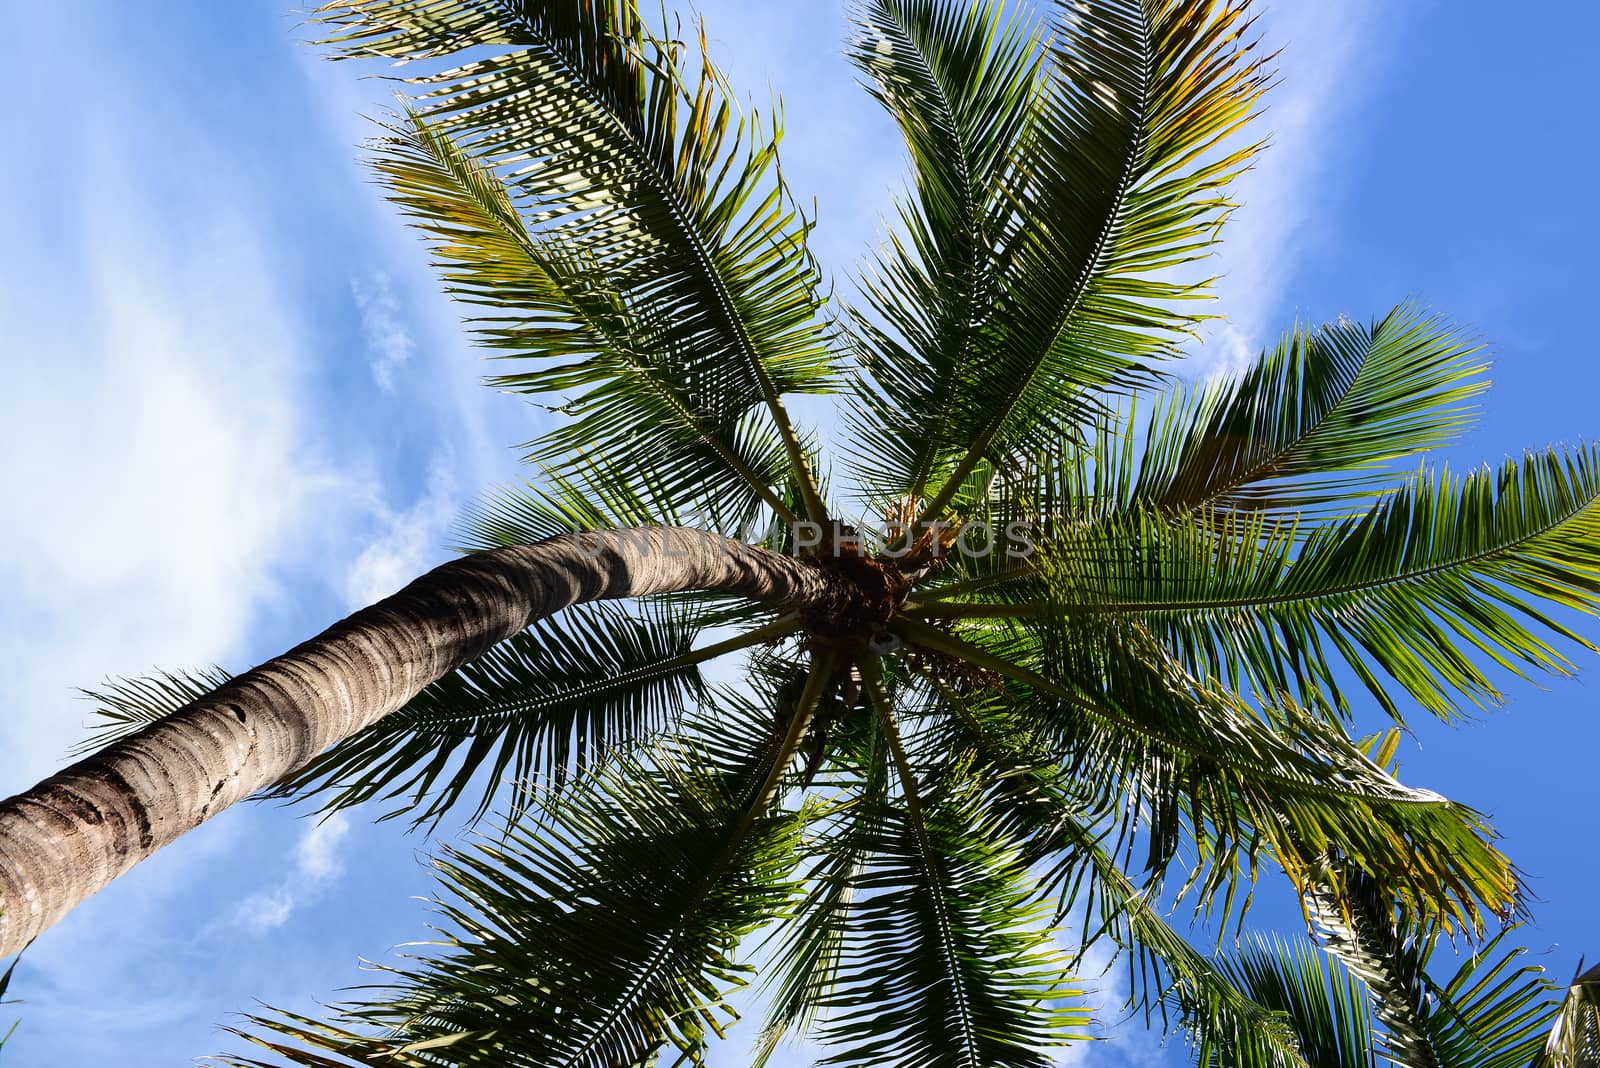 coconut palm tree with blue sky